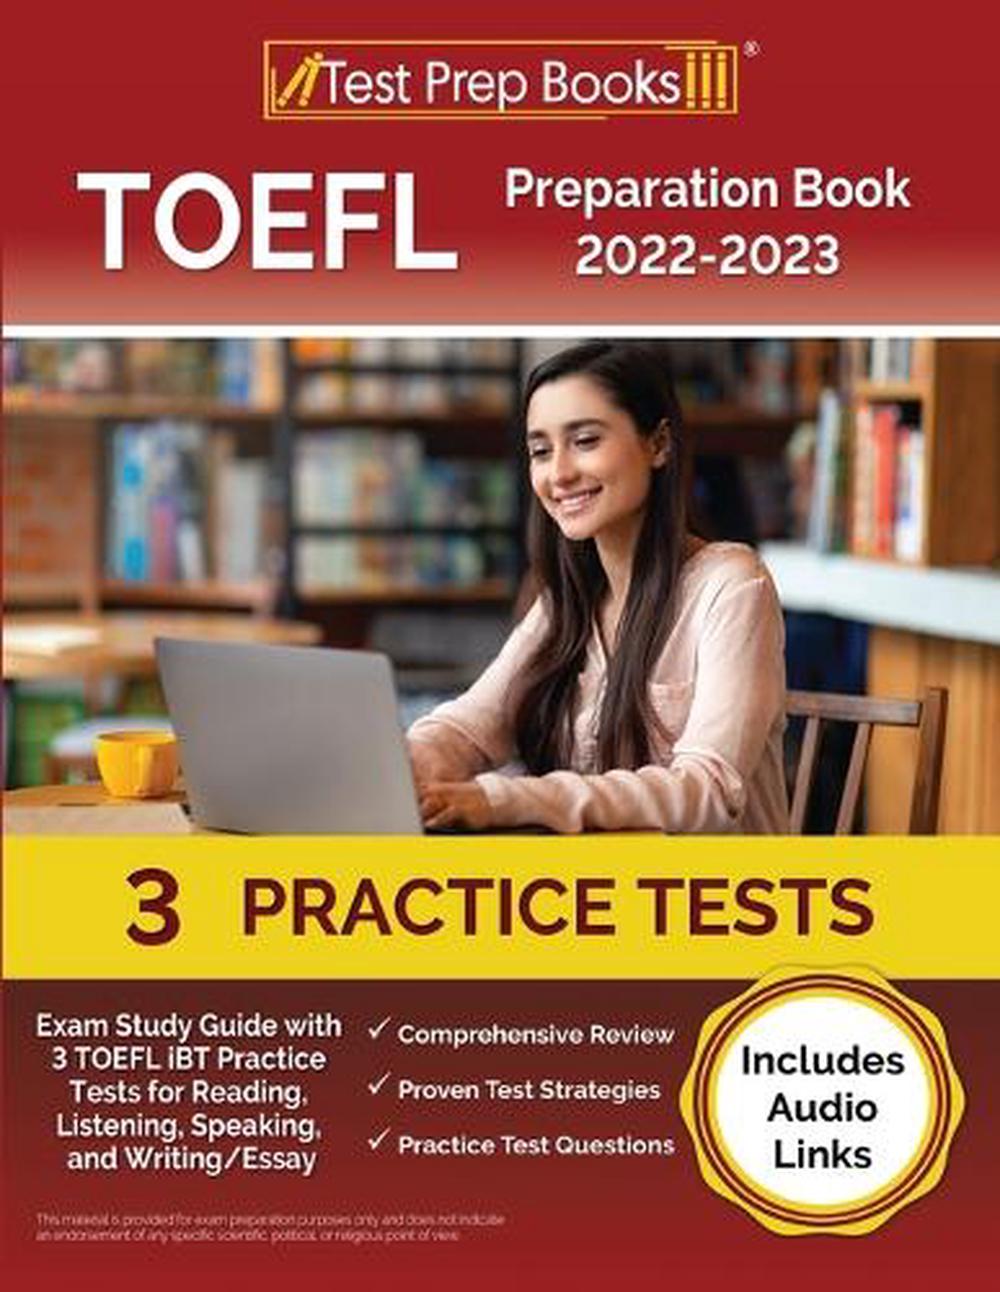 Toefl Preparation Book 20222023 by Joshua Rueda, Paperback